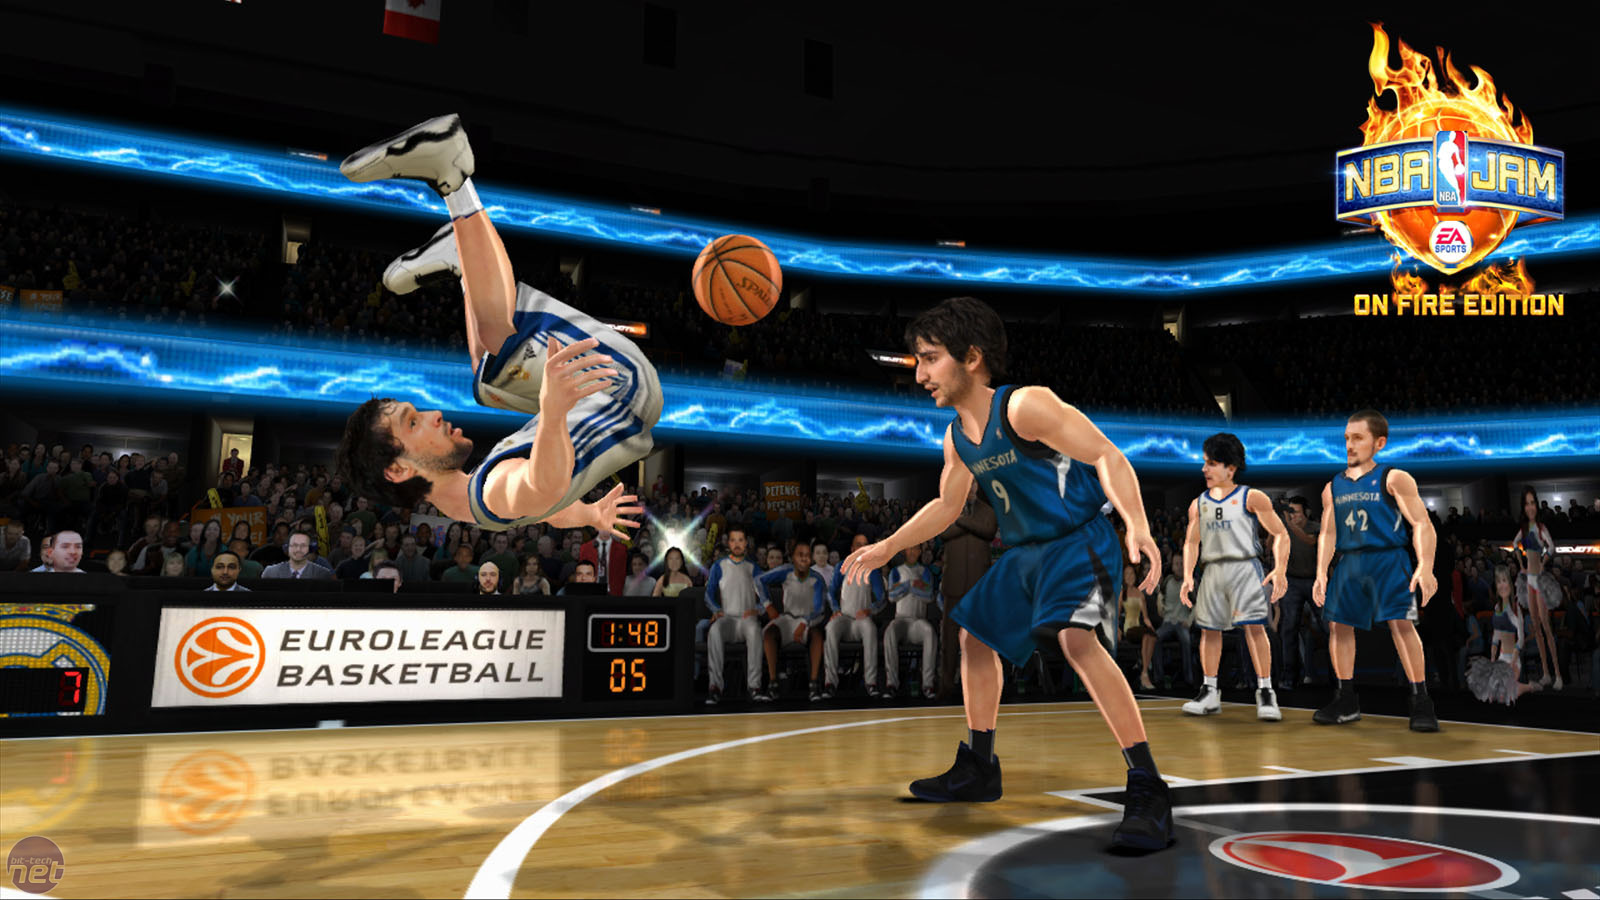 NBA JAM: On Fire Edition – Now Available on XBLA/PSN